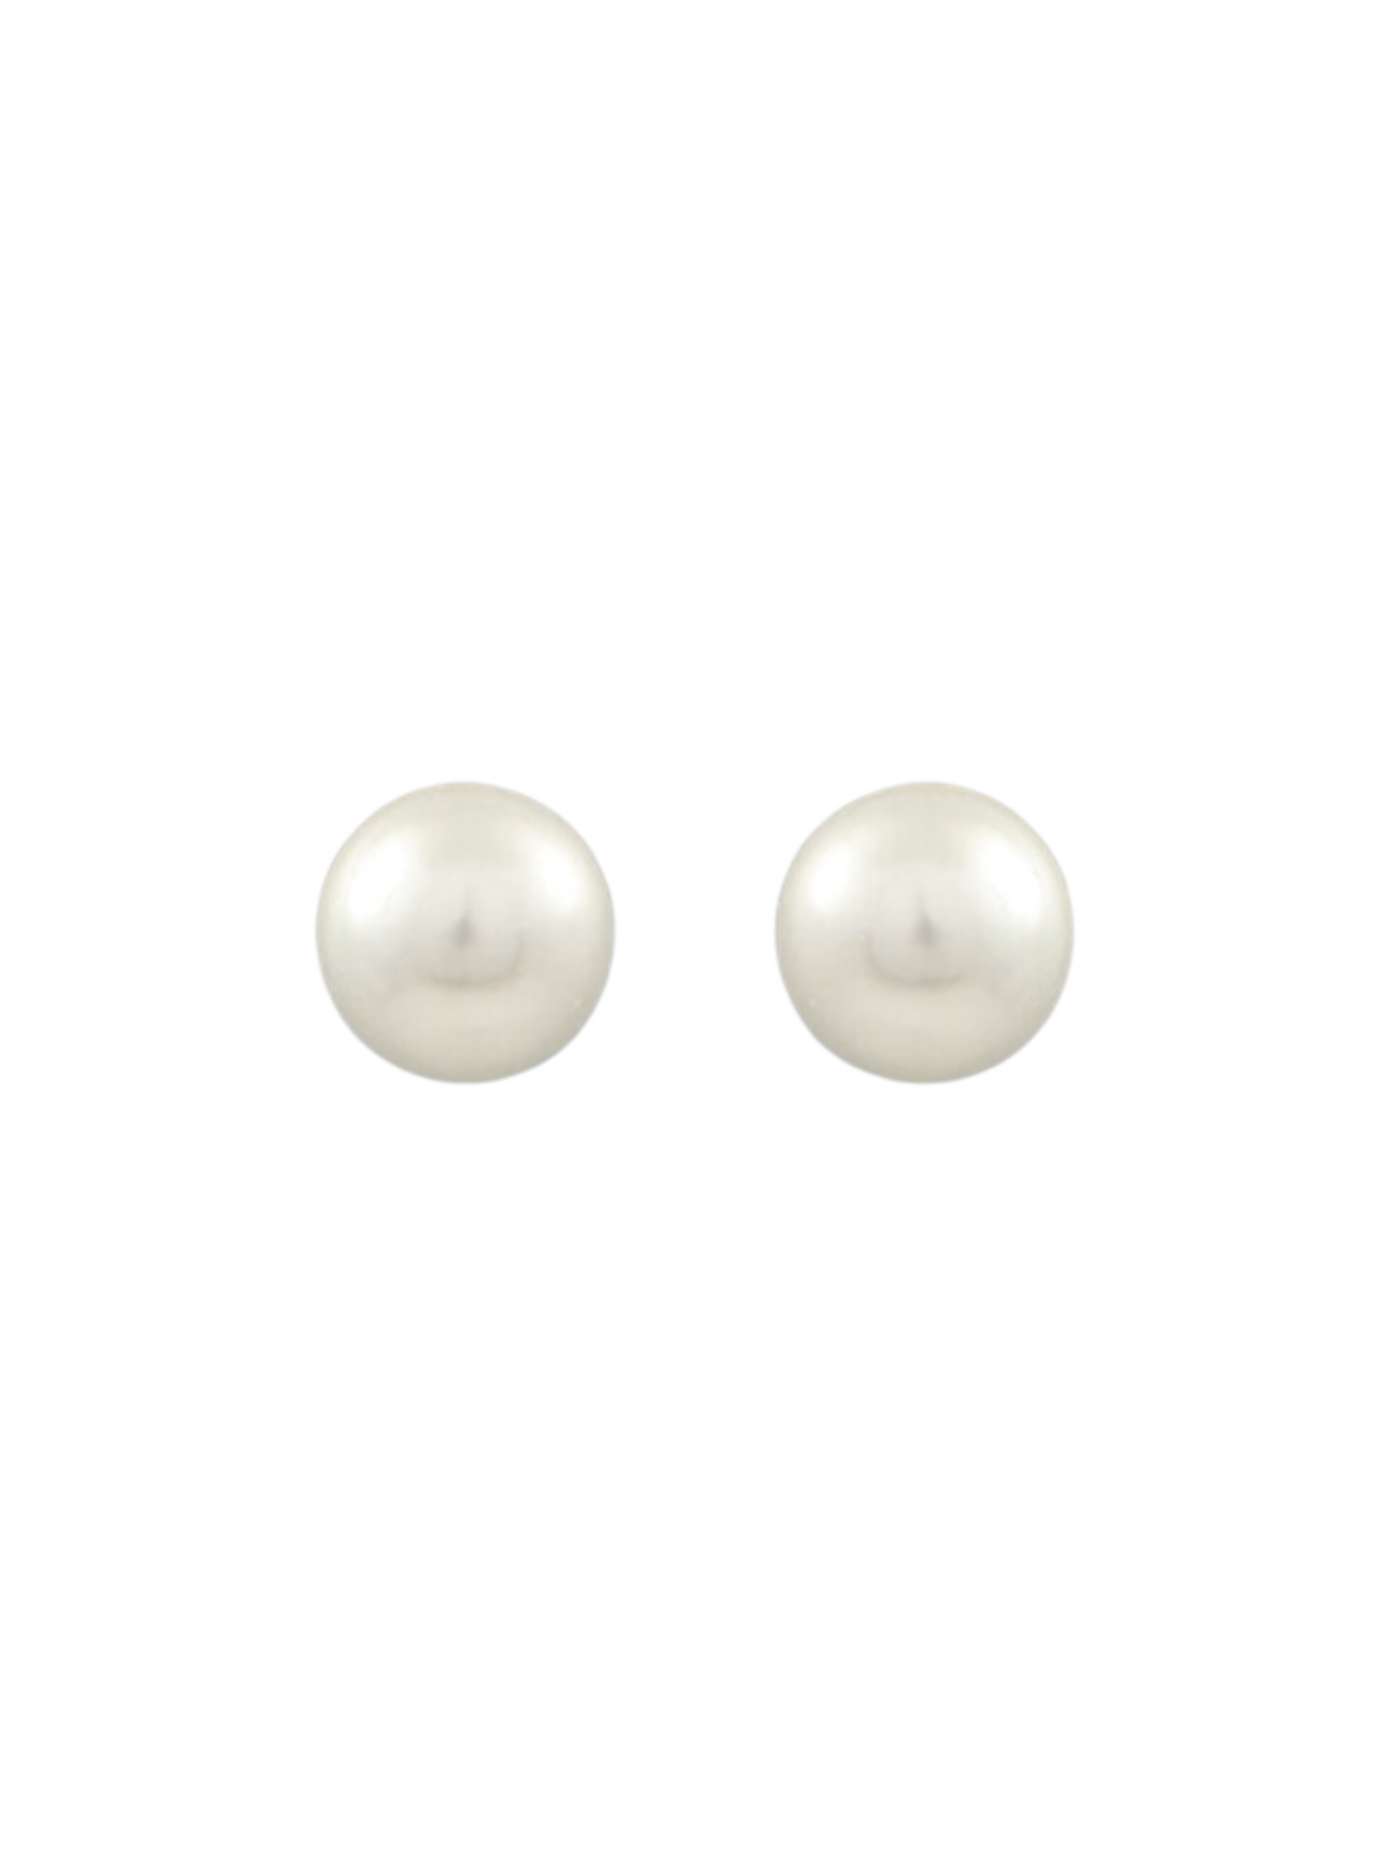 16mm Pearl Stud Earrings on white background.